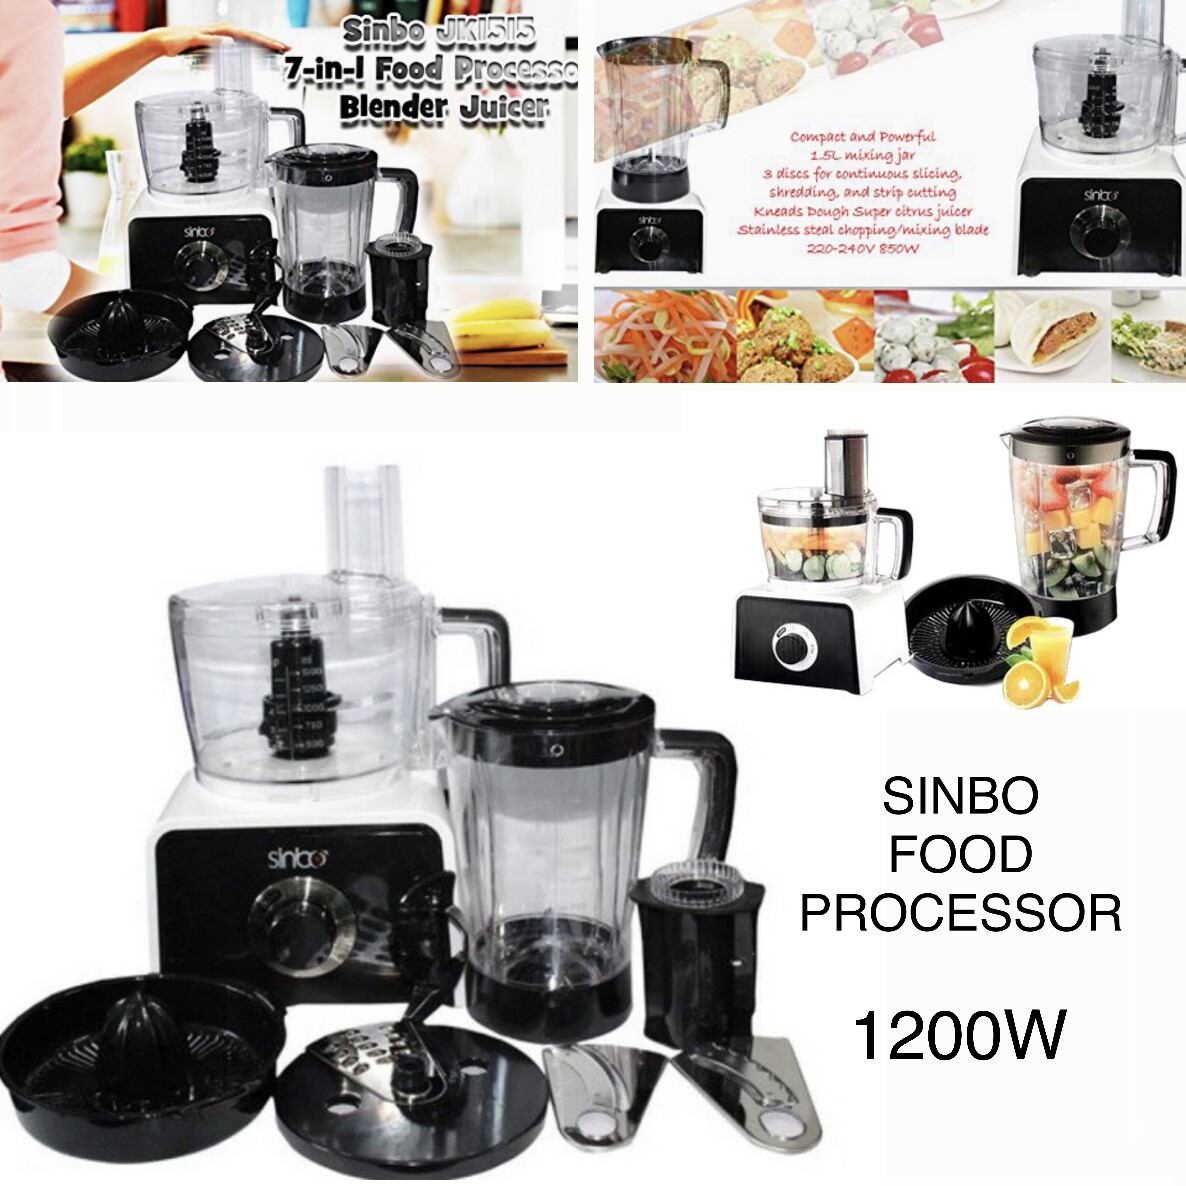 SINBO Food Processor